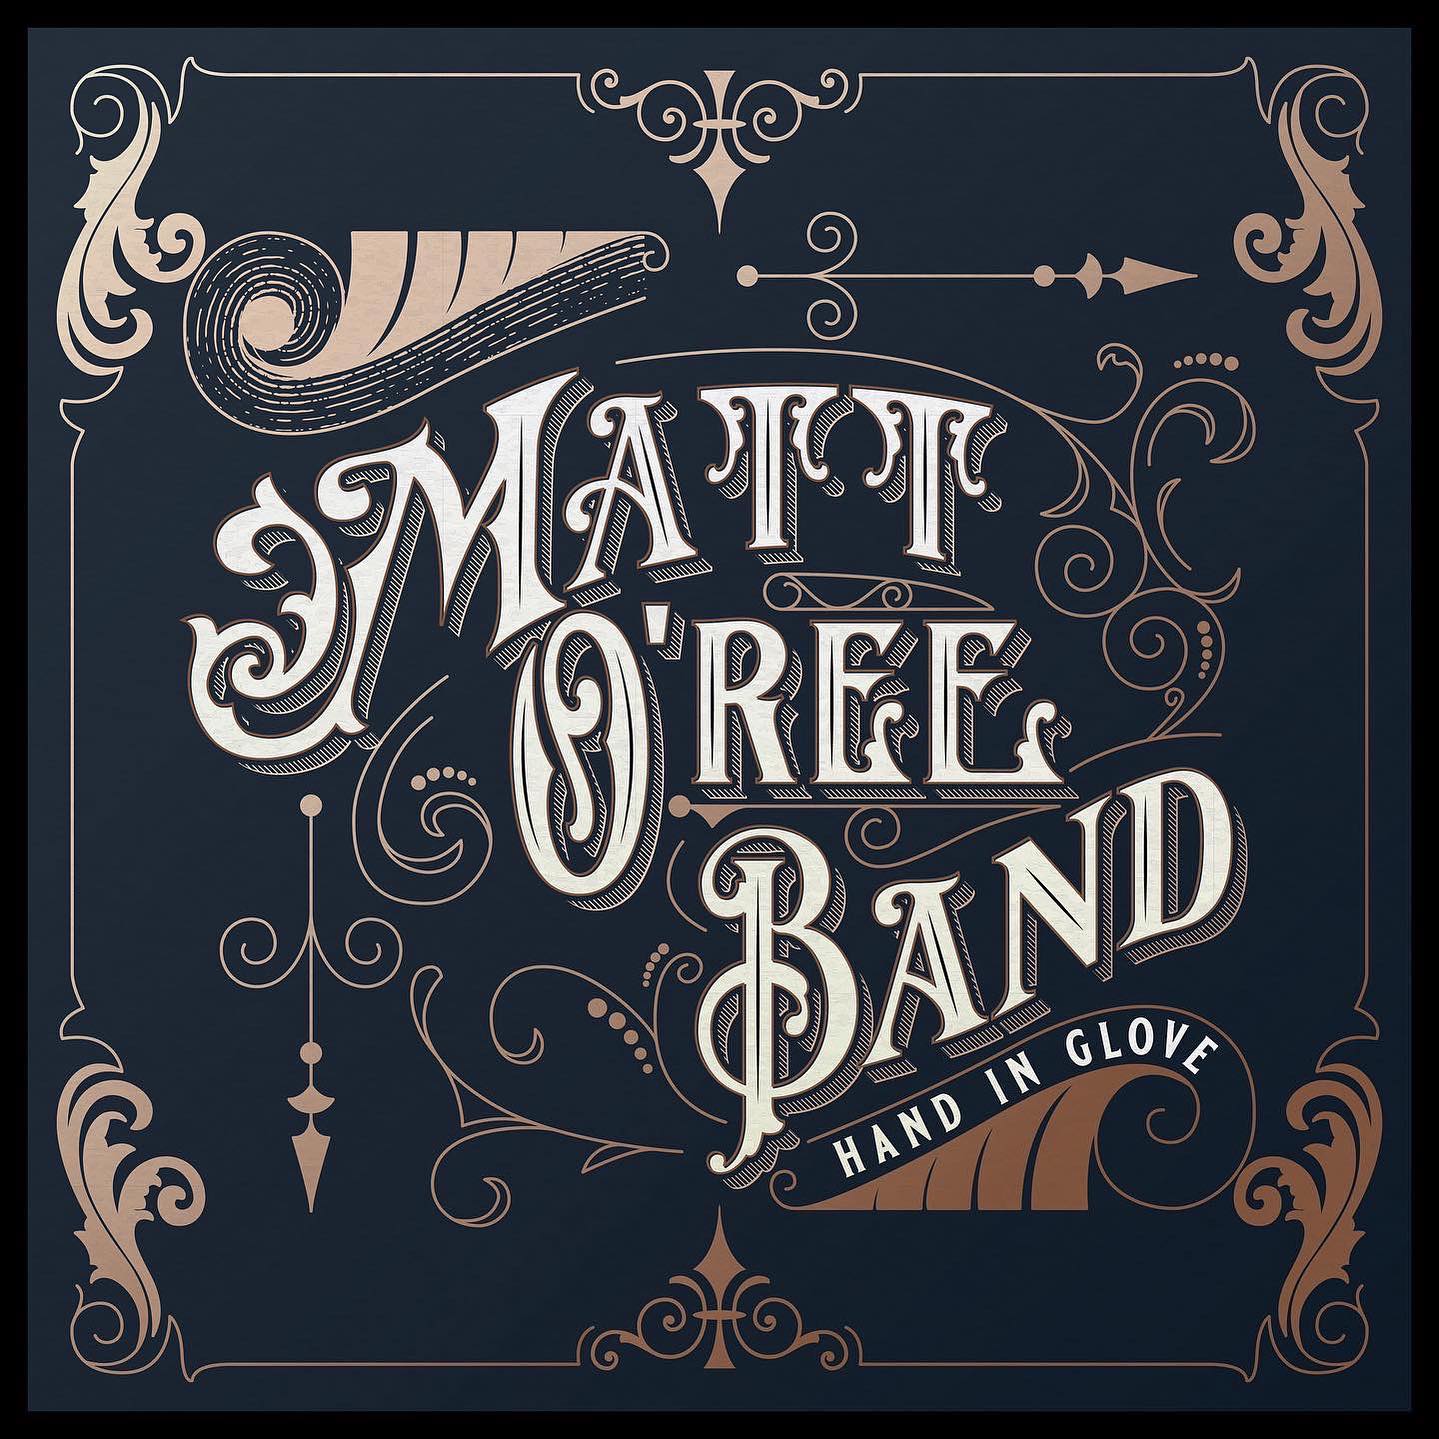 Matt O'Ree Band set to release new album, "Hand In Glove"